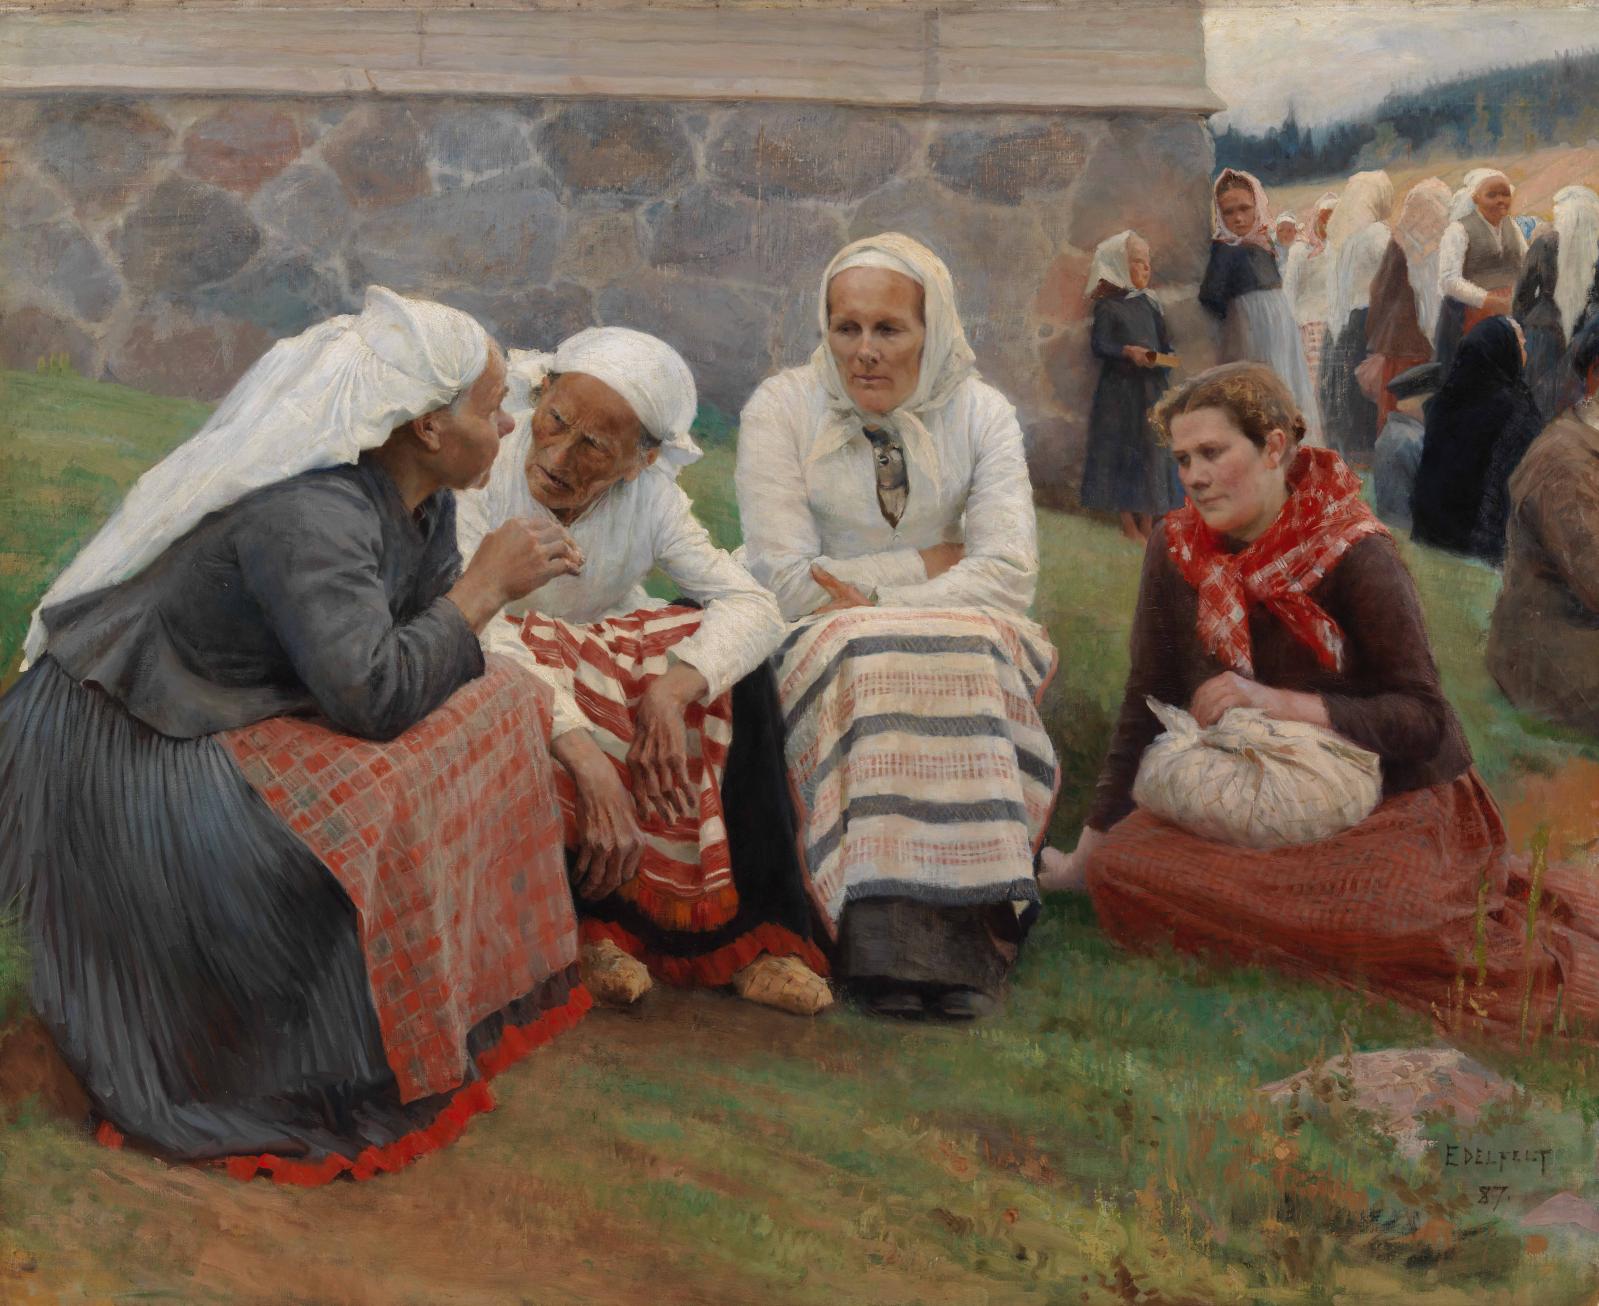 Albert Edelfelt, Devant l’église, Finlande, 1887, huile sur toile, Helsinki, Ateneum Art Museum, Finnish National Gallery.© Finnish Nation